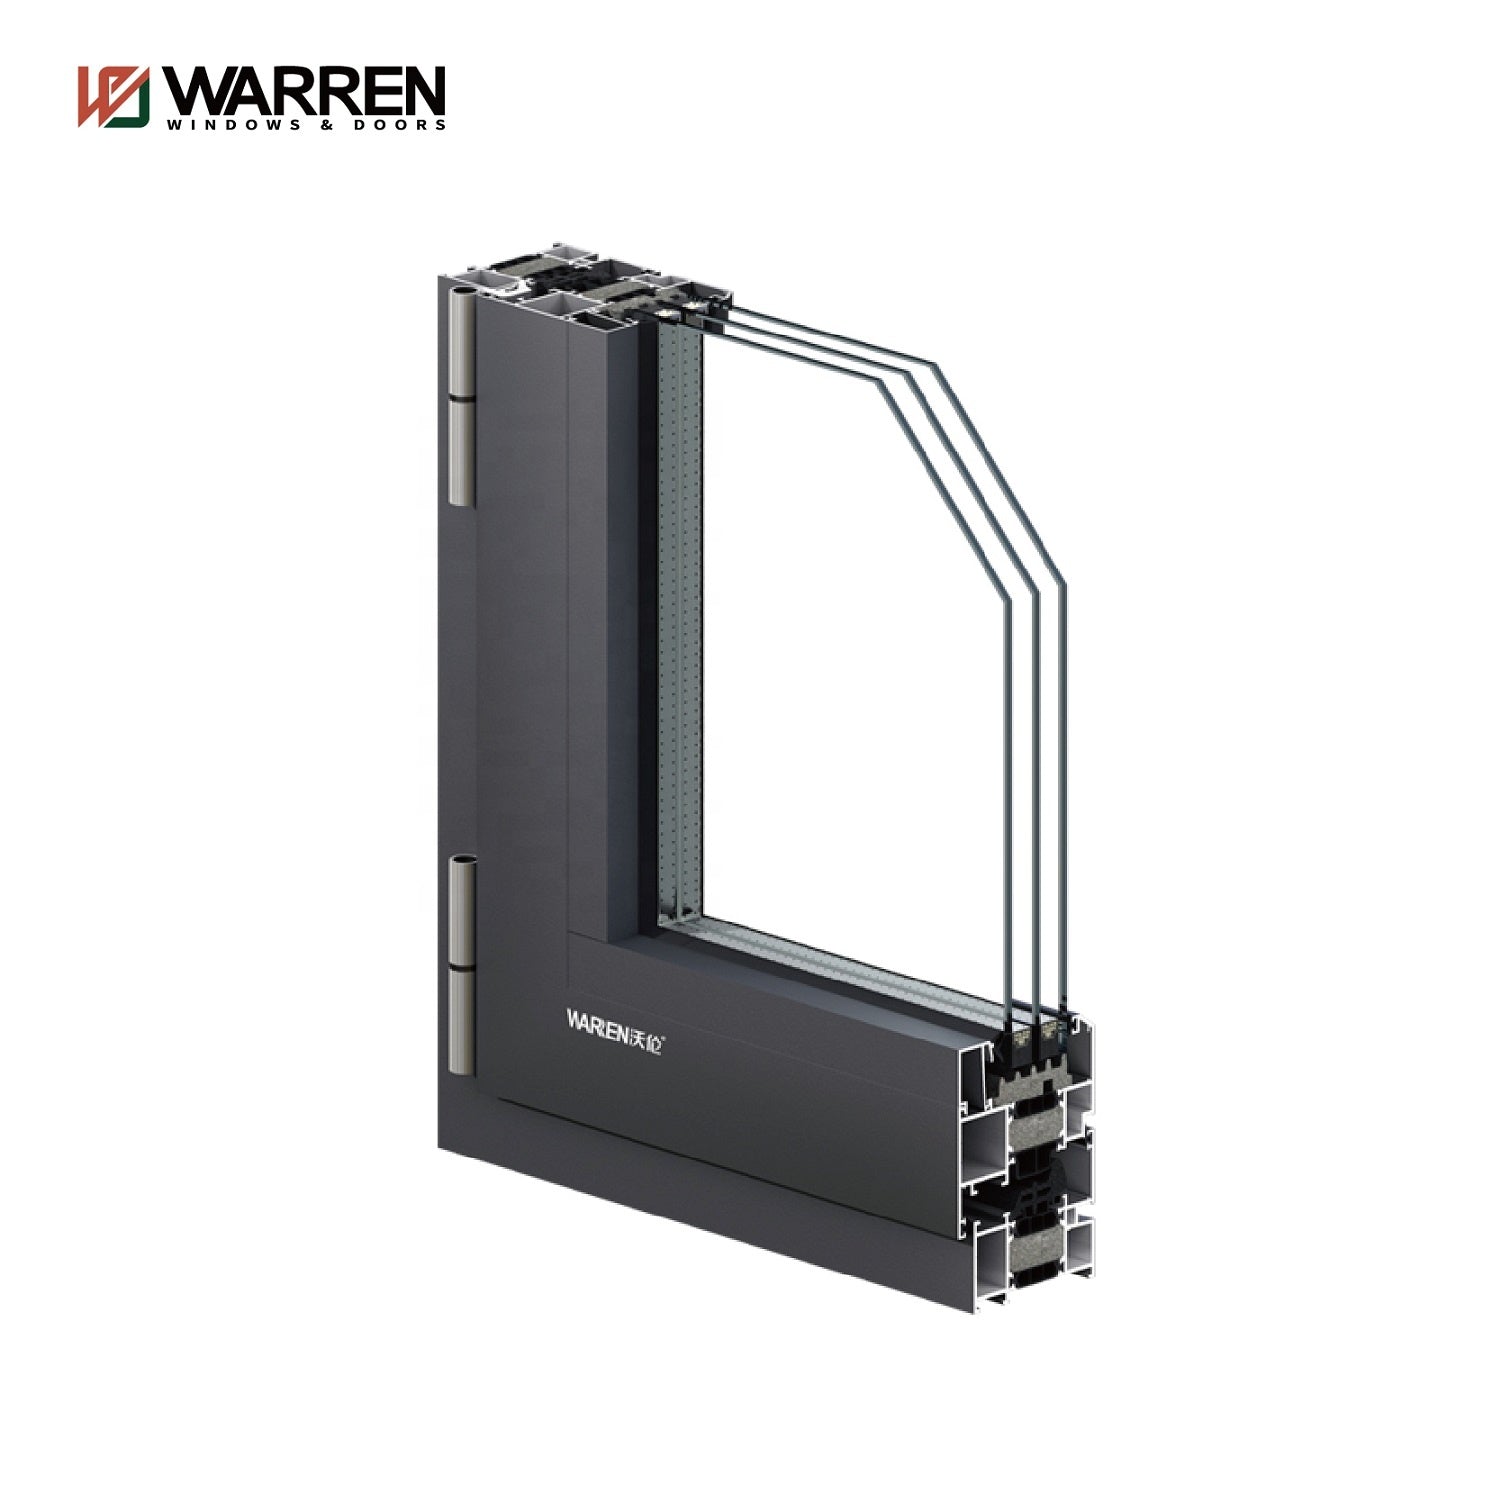 Warren Super quality glass casement window french window aluminum frame double glazing casement window